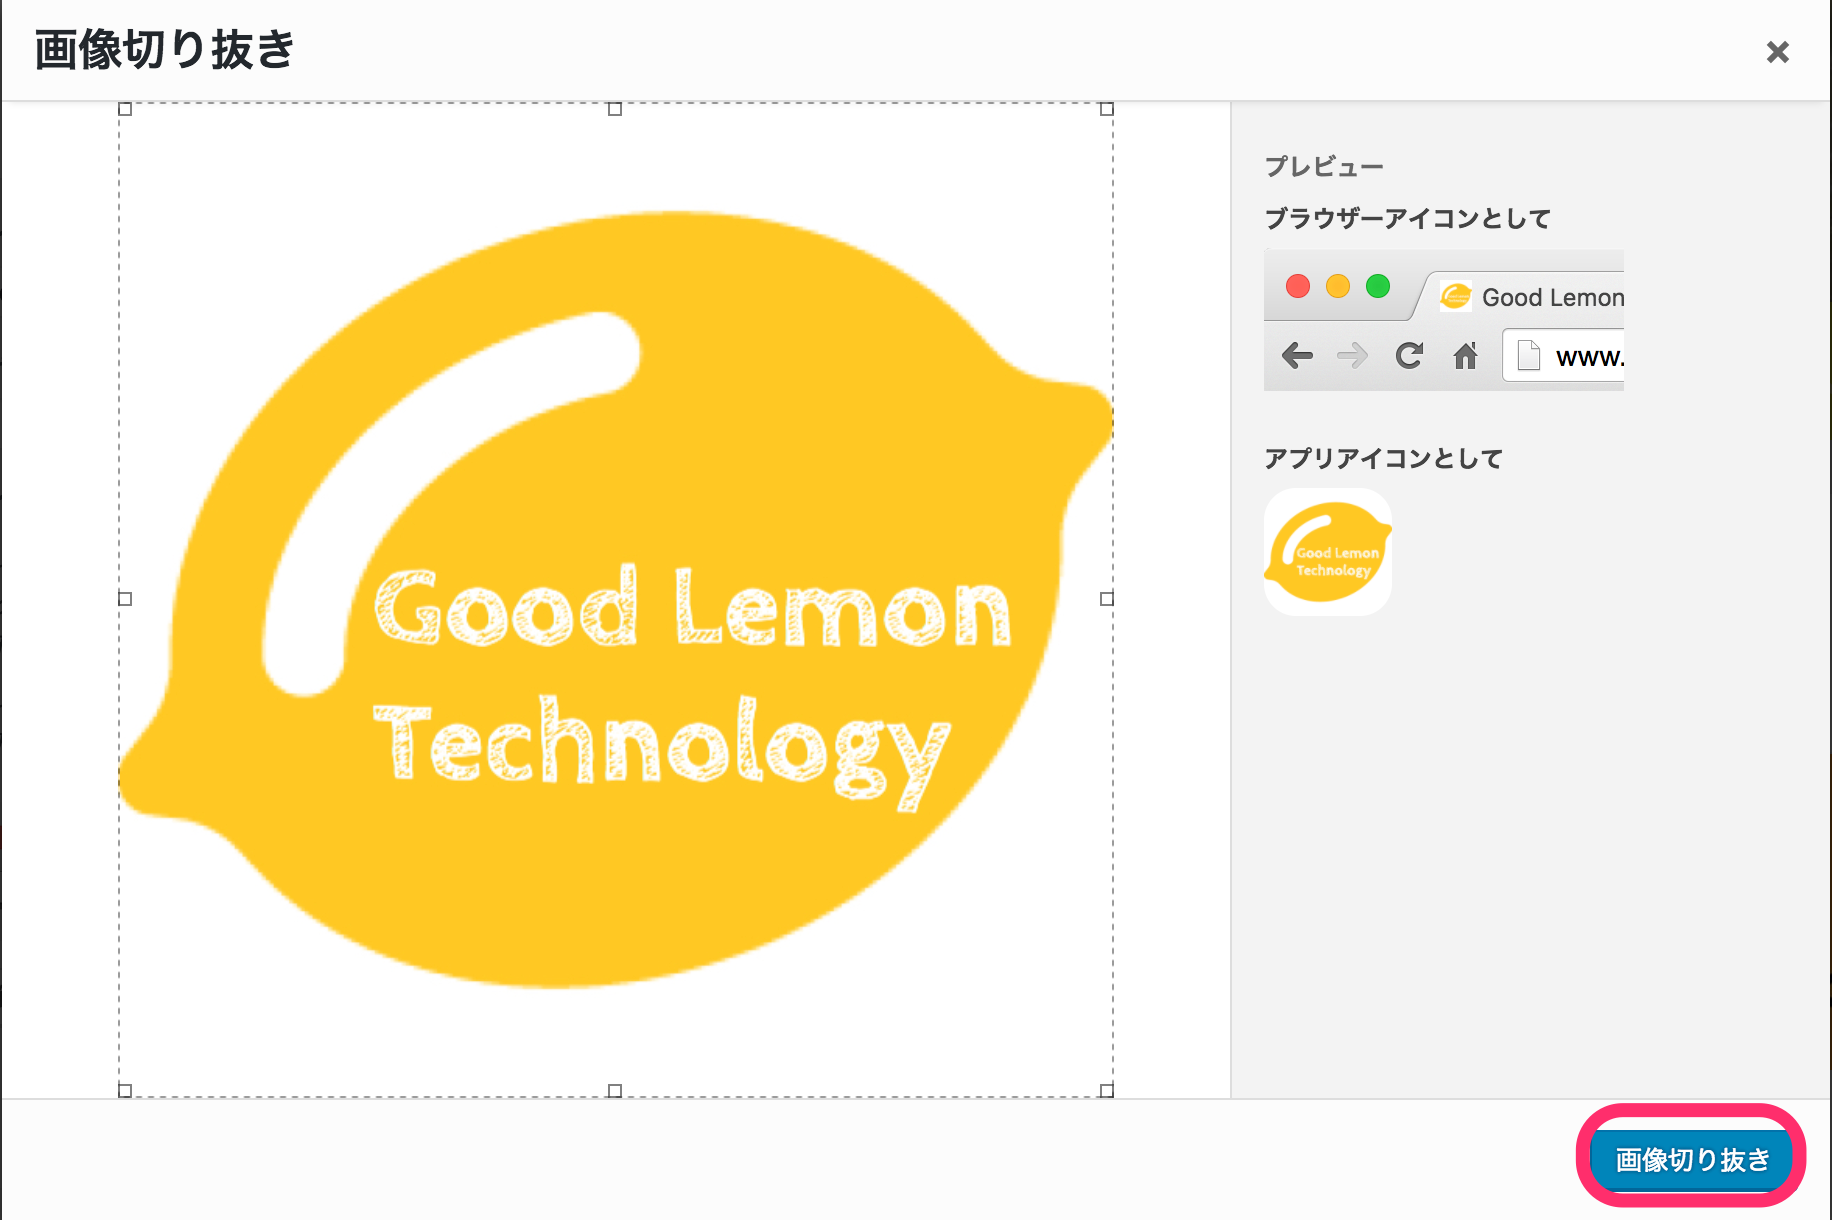 Good Lemon4 Good Lemon Technology